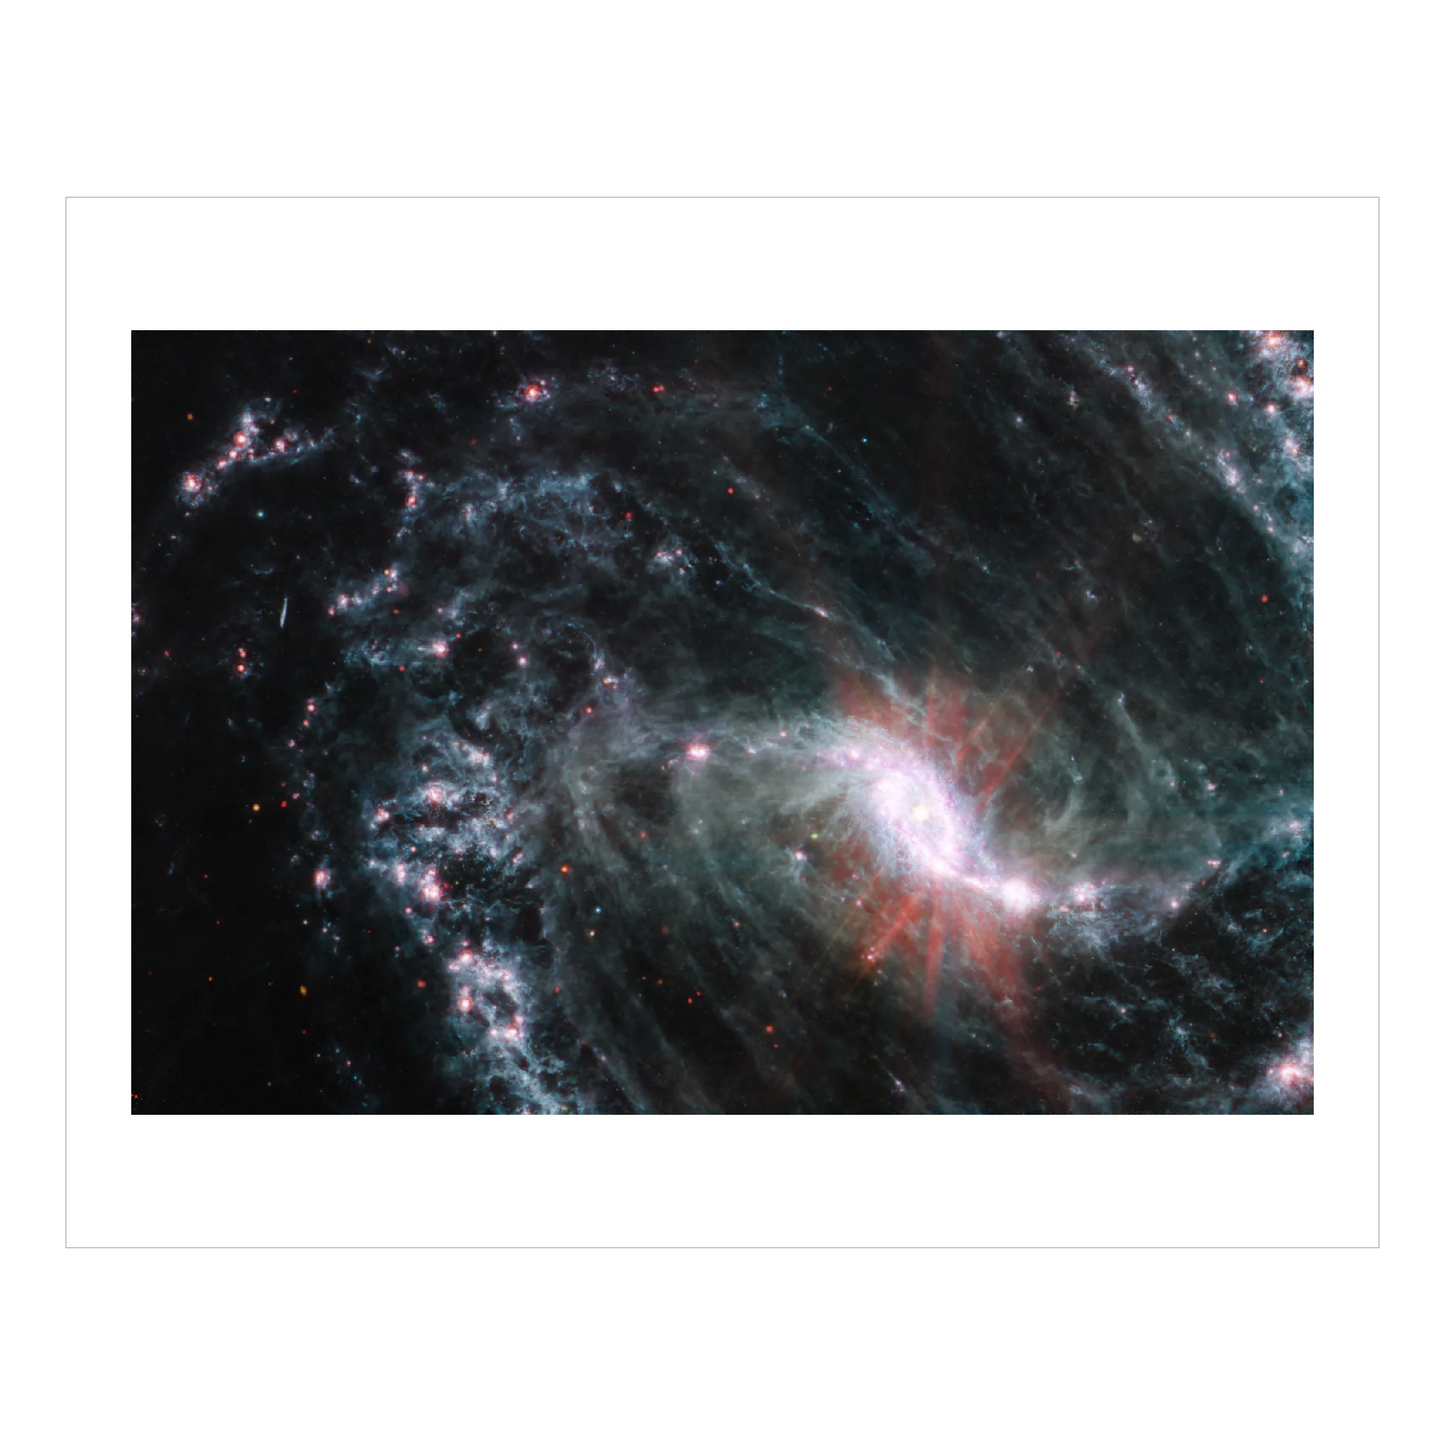 Spiral Galaxy NGC 1365